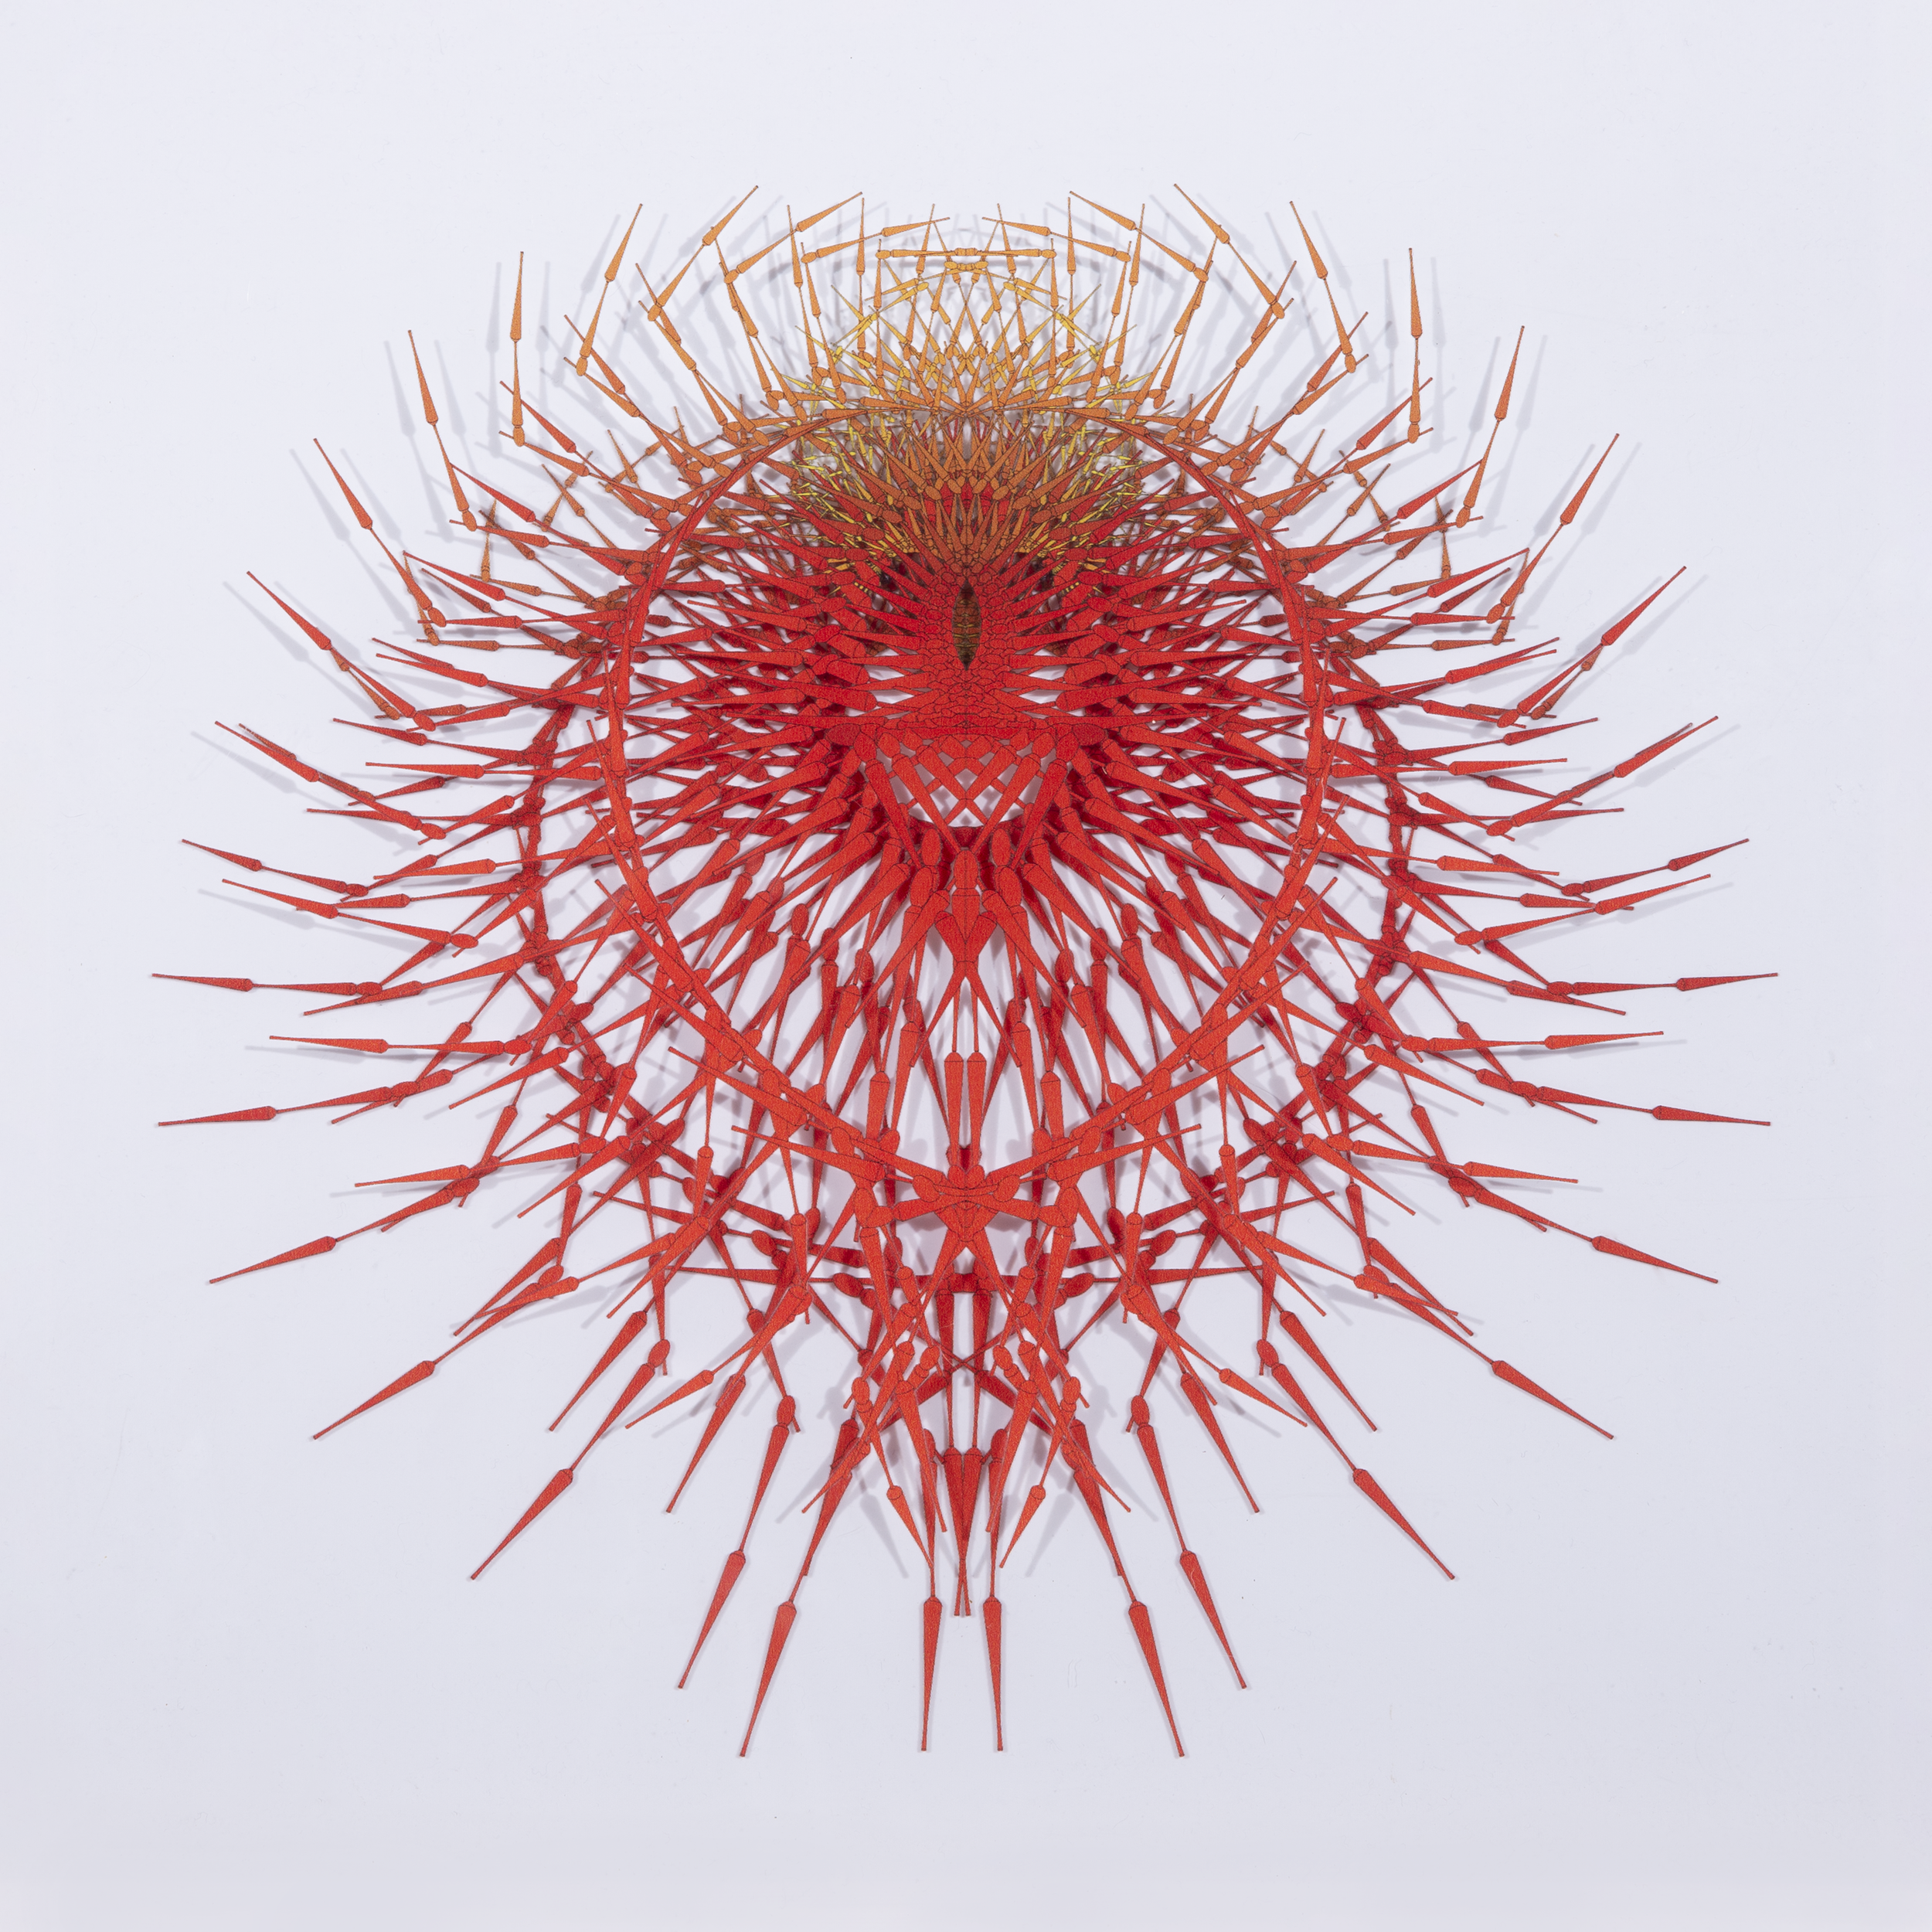 Red 4, 16” x 16” multi layered print on acrylic £1050, ltd edition of 20